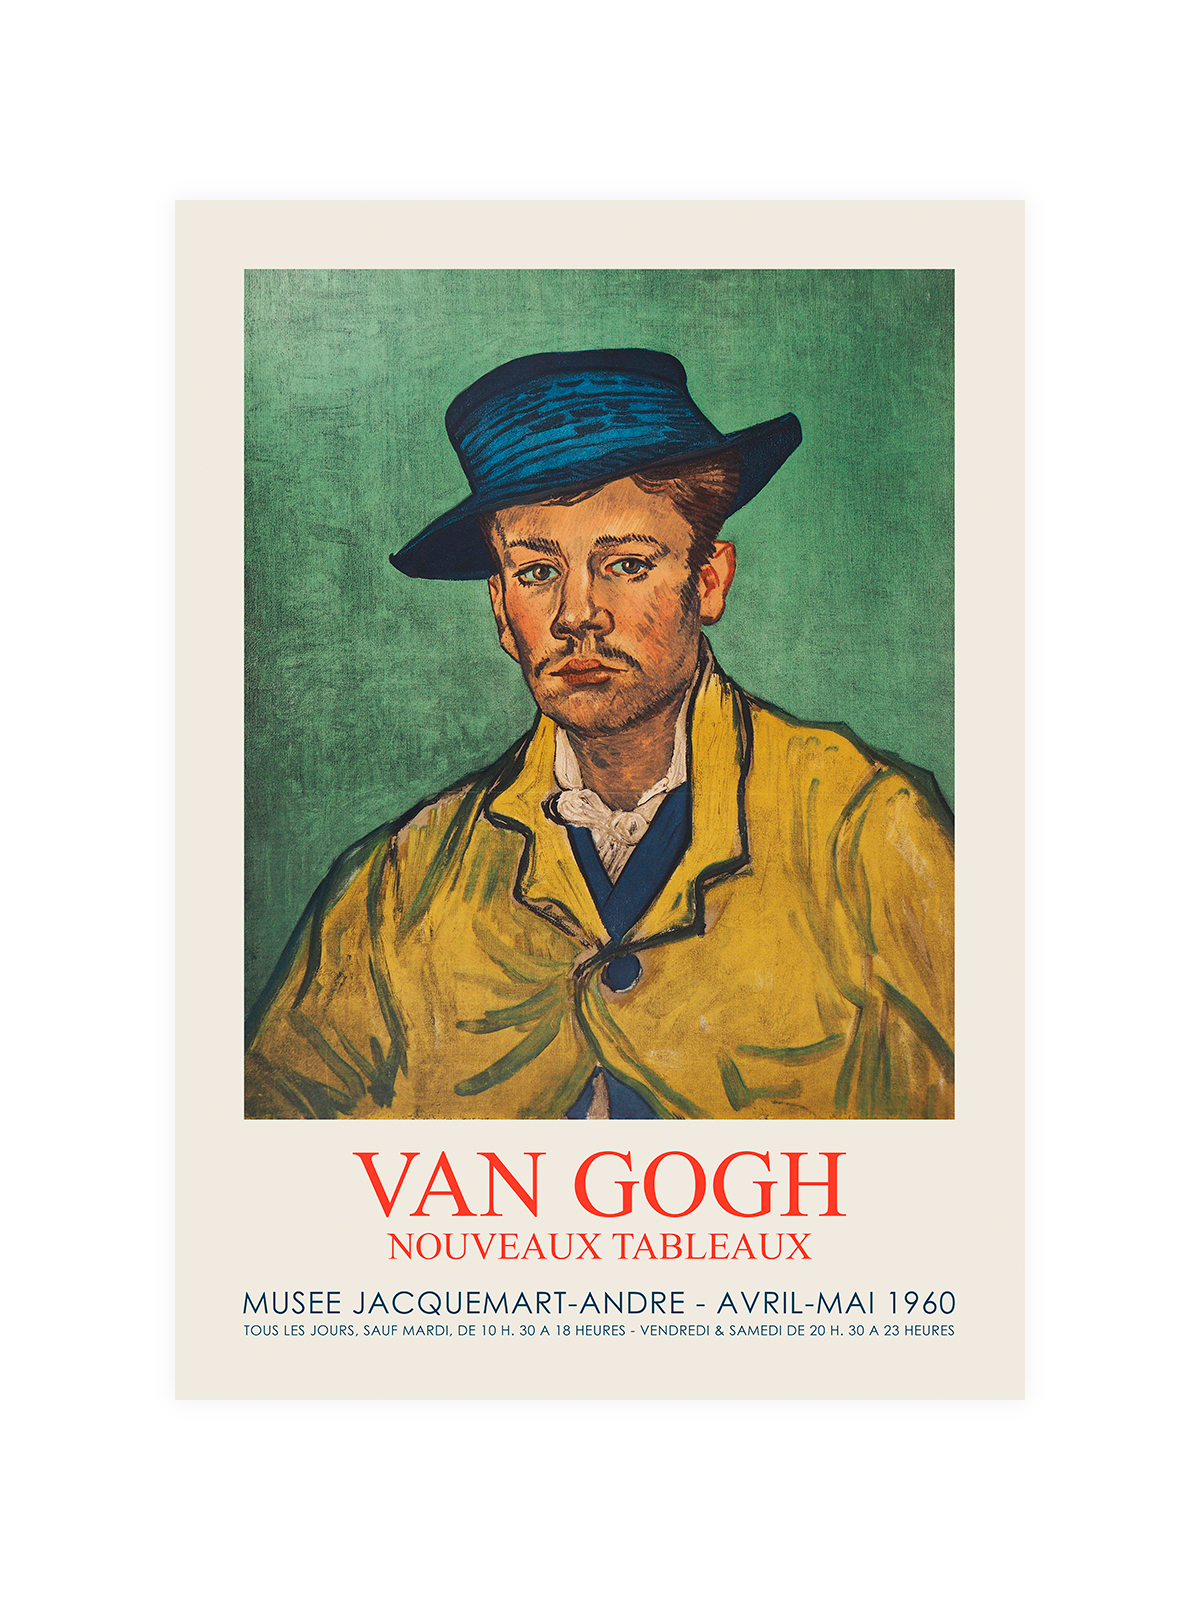 Vincent Van Gogh 1960 Exibition Poster